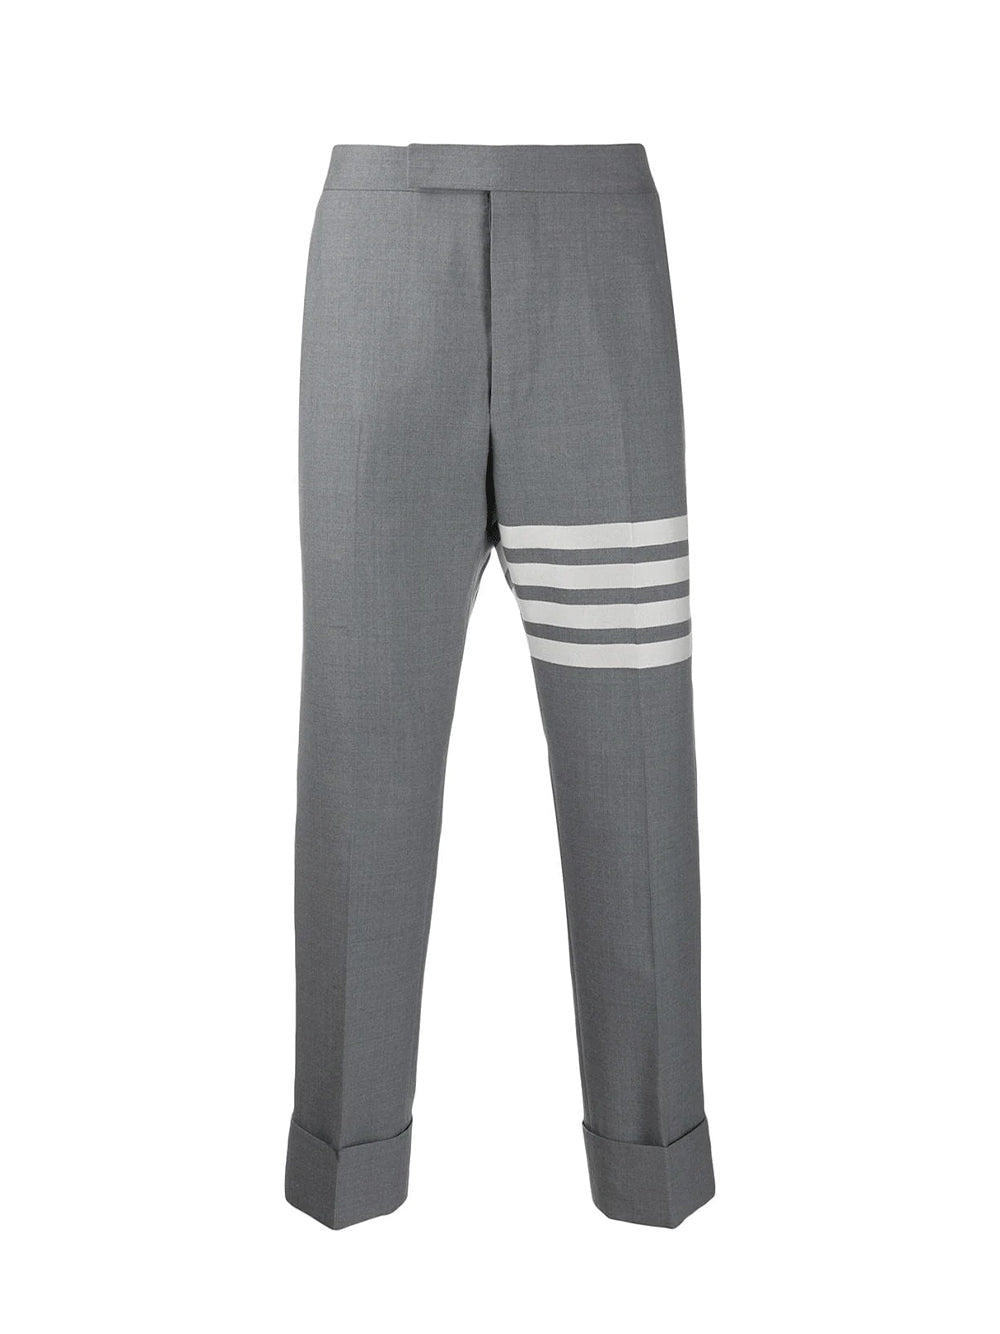 Medium Gray Plain Weave Suiting Classic 4-Bar Trouser (Grey)